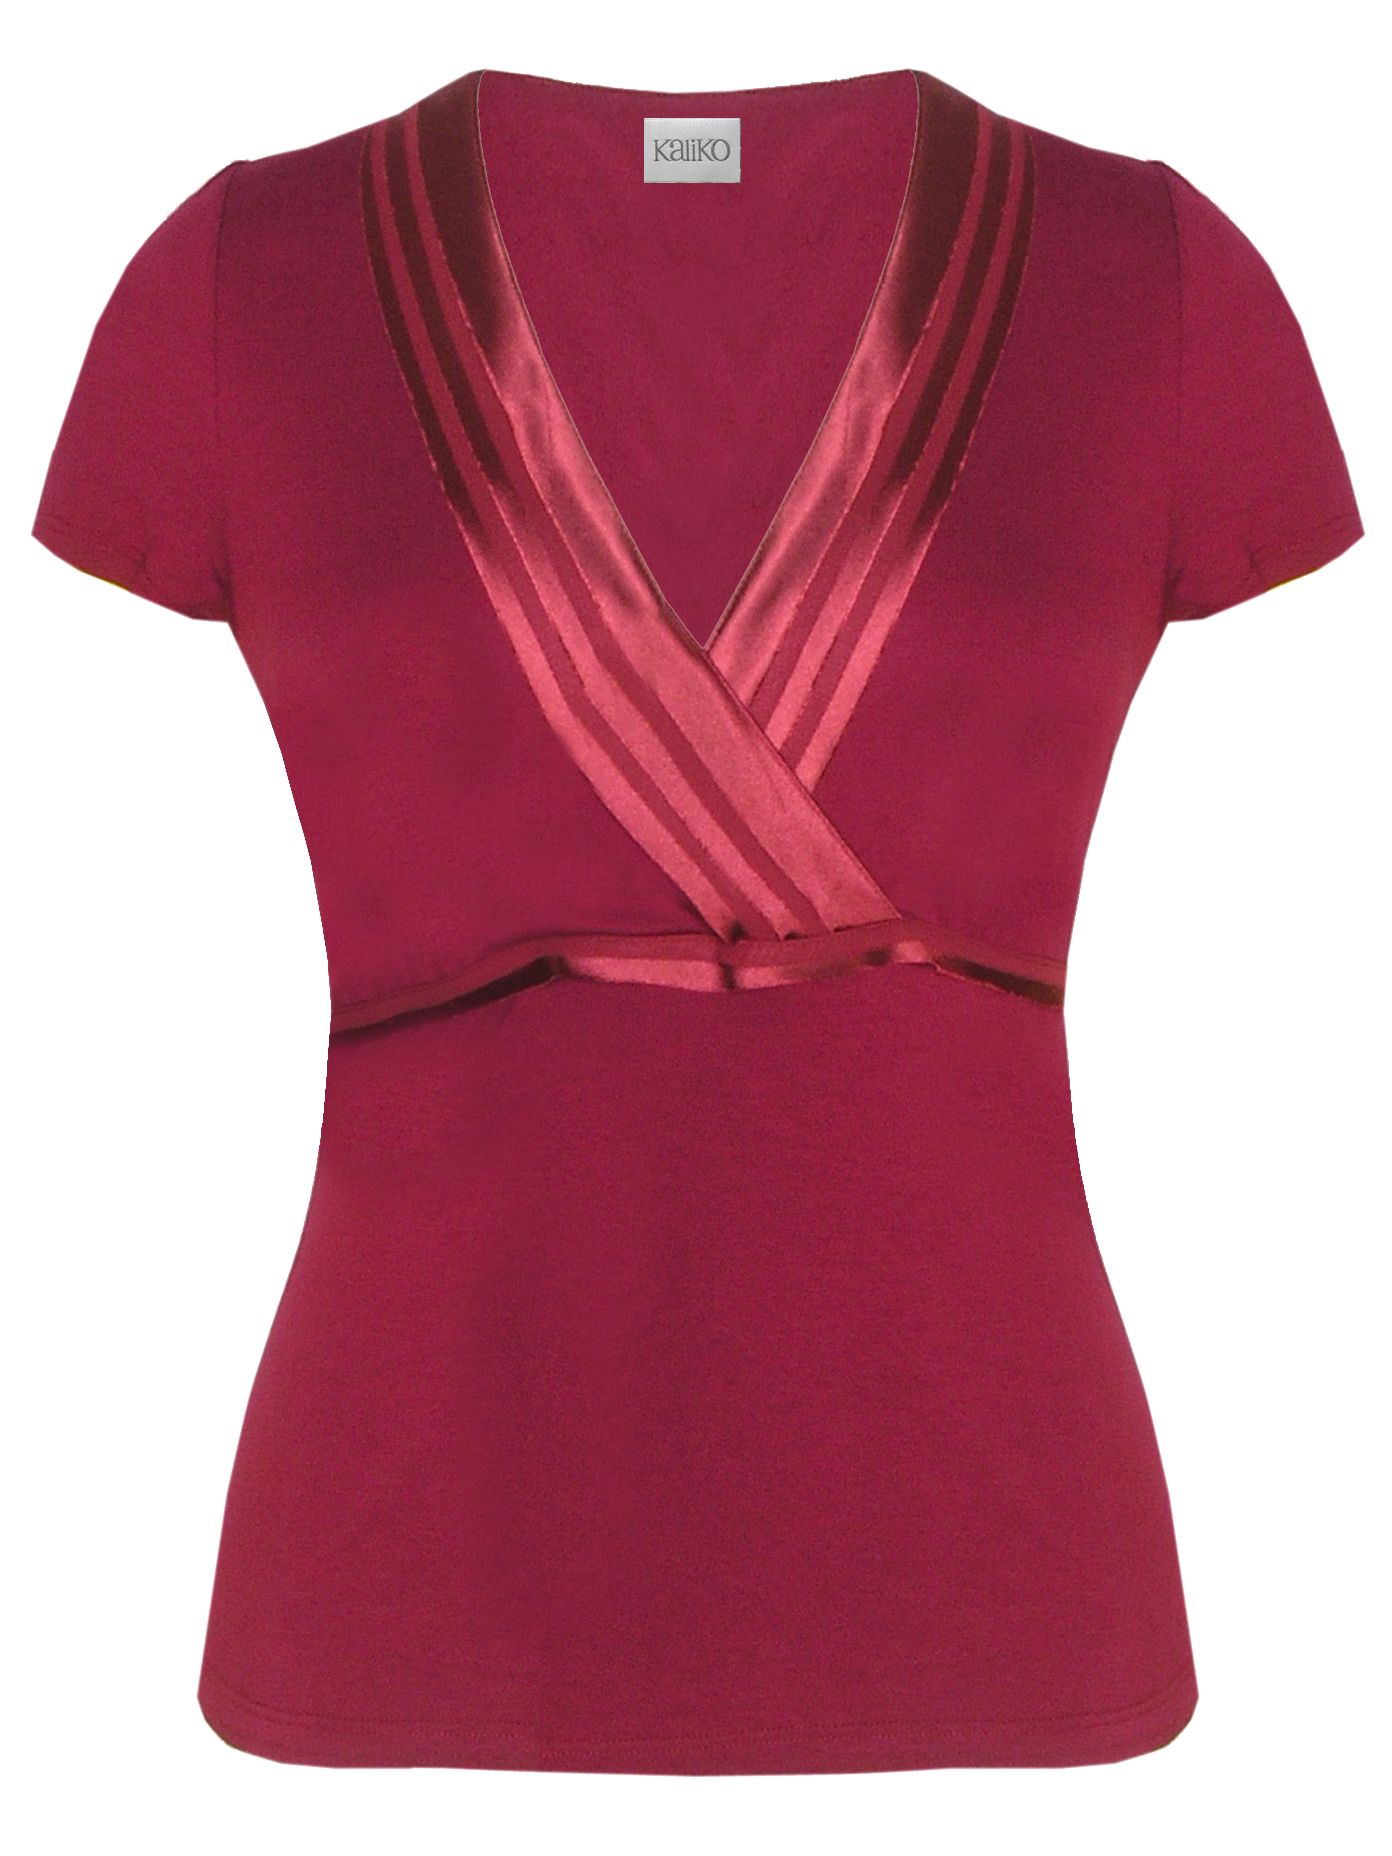 Silk Trim Short Sleeve T-Shirt, Dark red